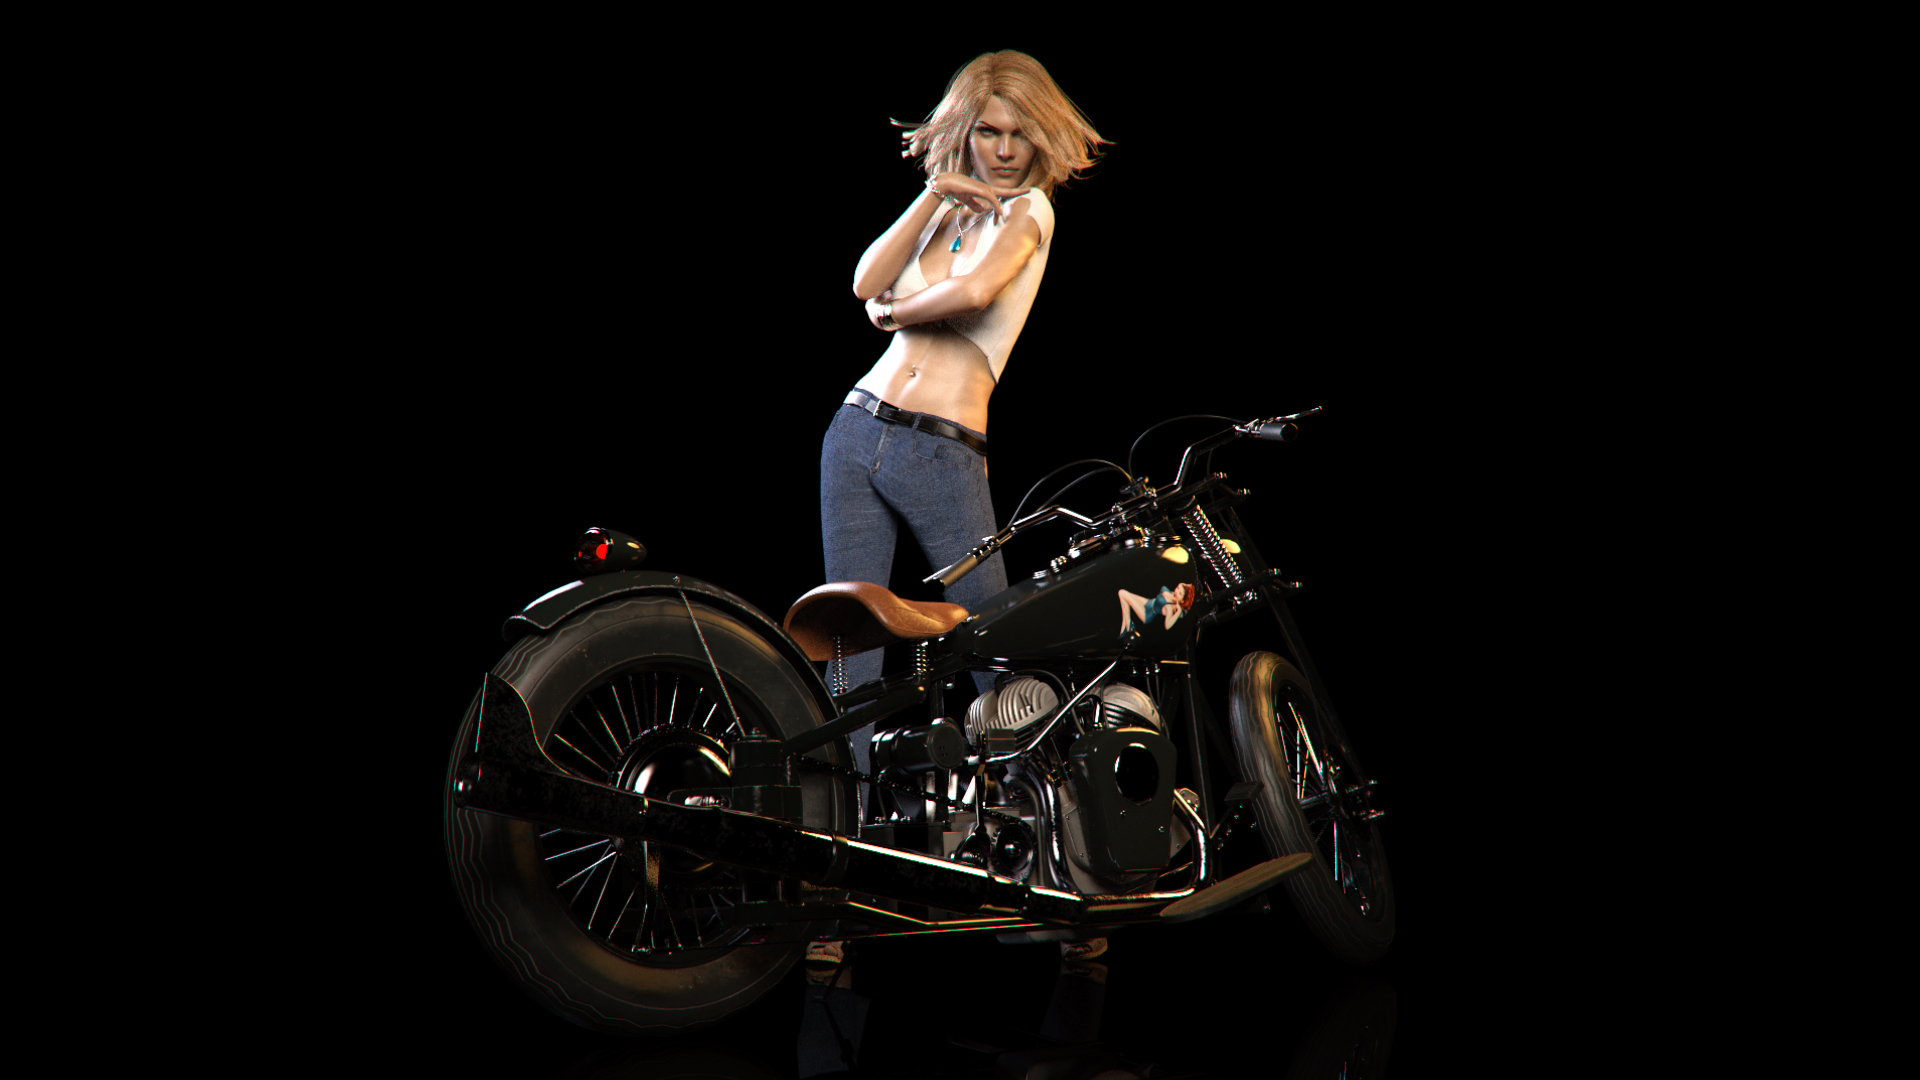 Old Street Bike by: Mely3D, 3D Models by Daz 3D